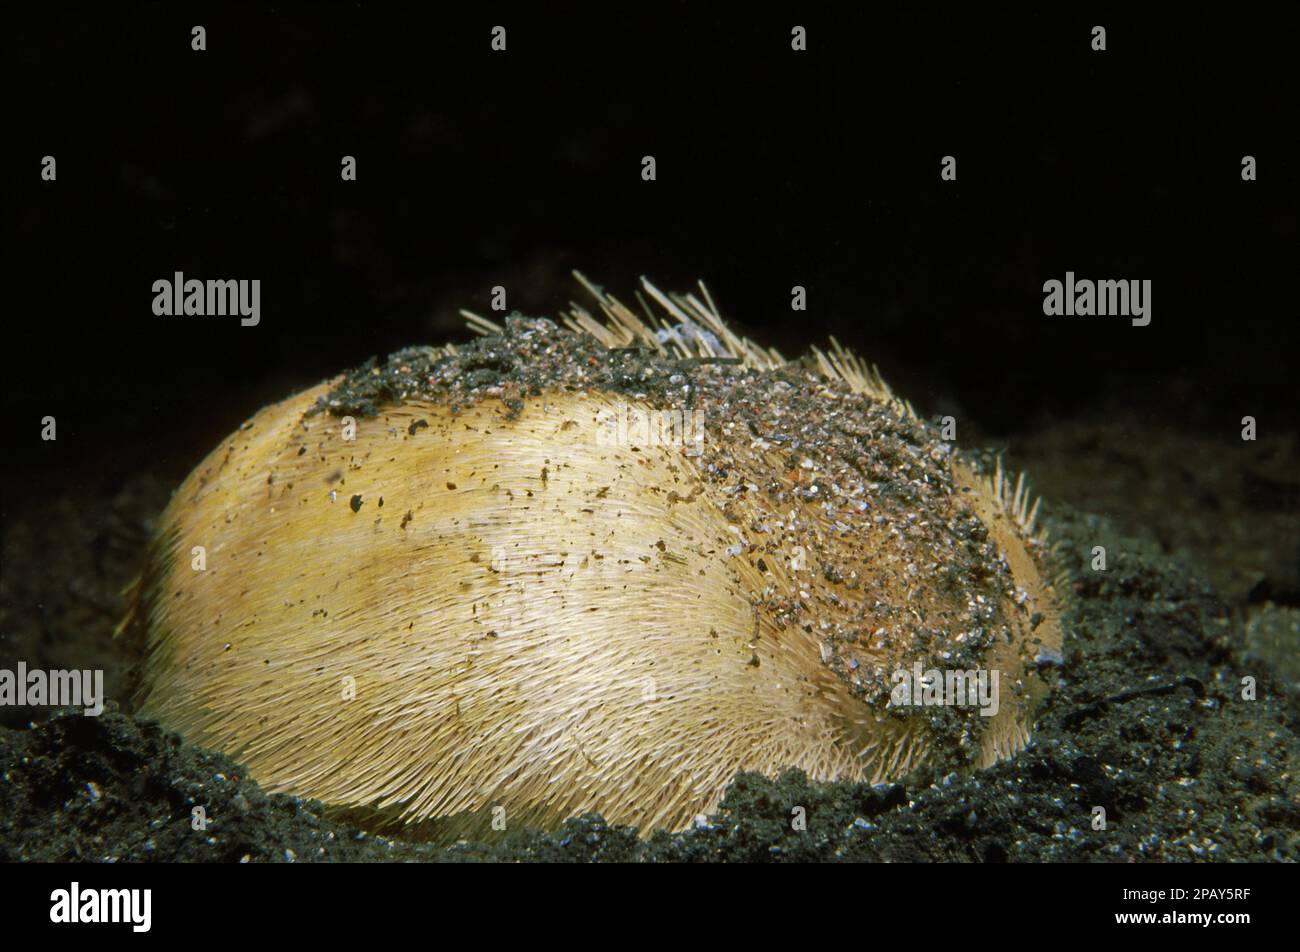 Common heart urchin (Echinocardium cordatum) or sea potato on a sandy seabed, UK. Stock Photo